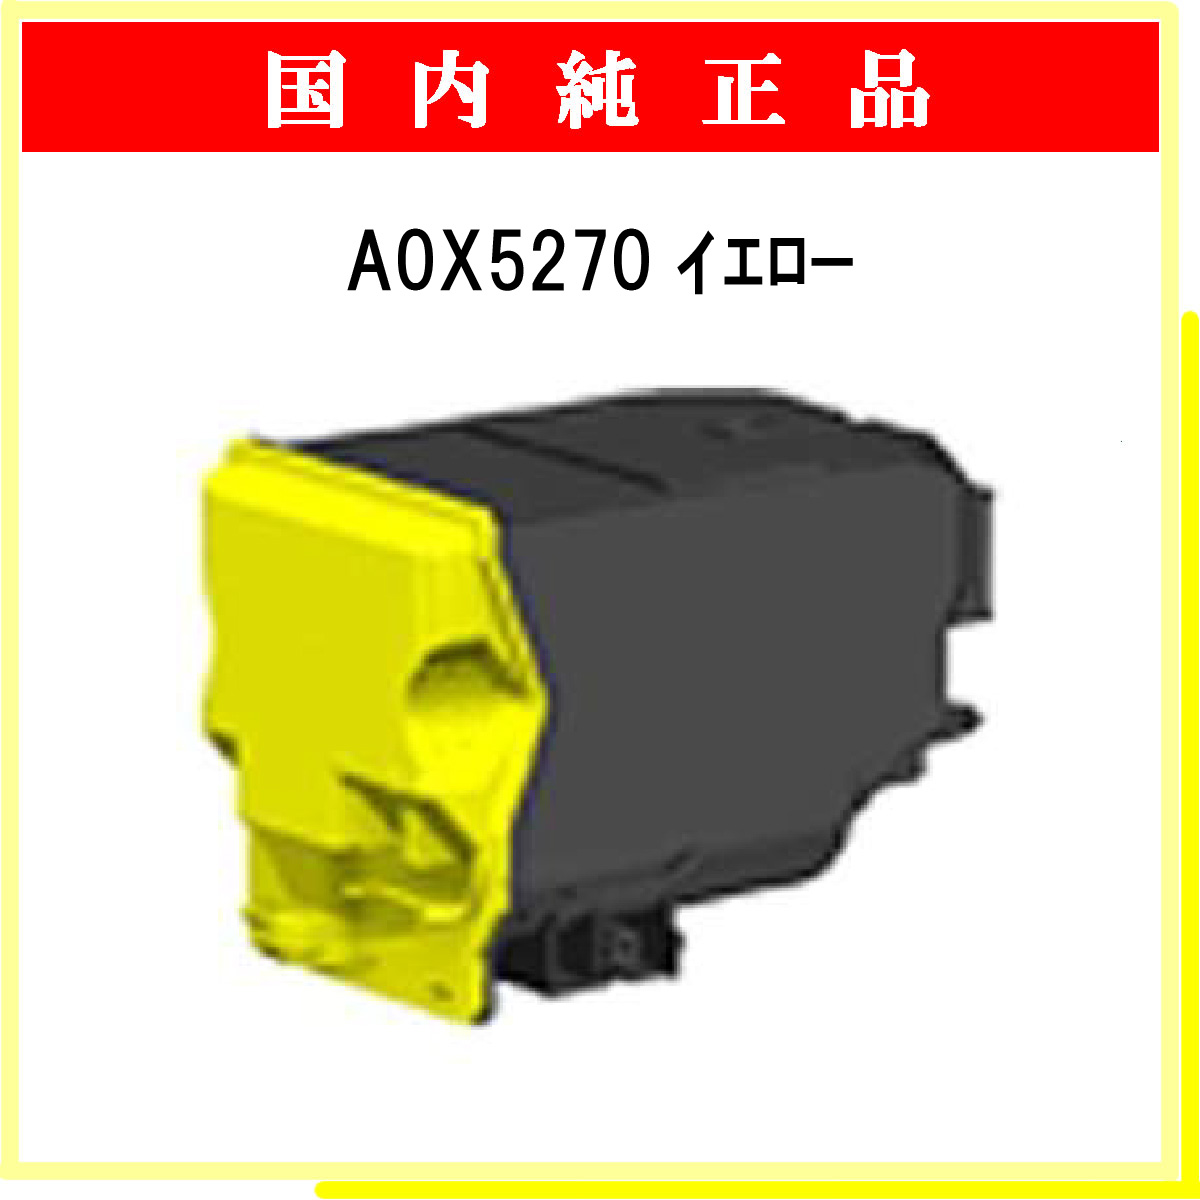 A0X5270 (大容量) 純正